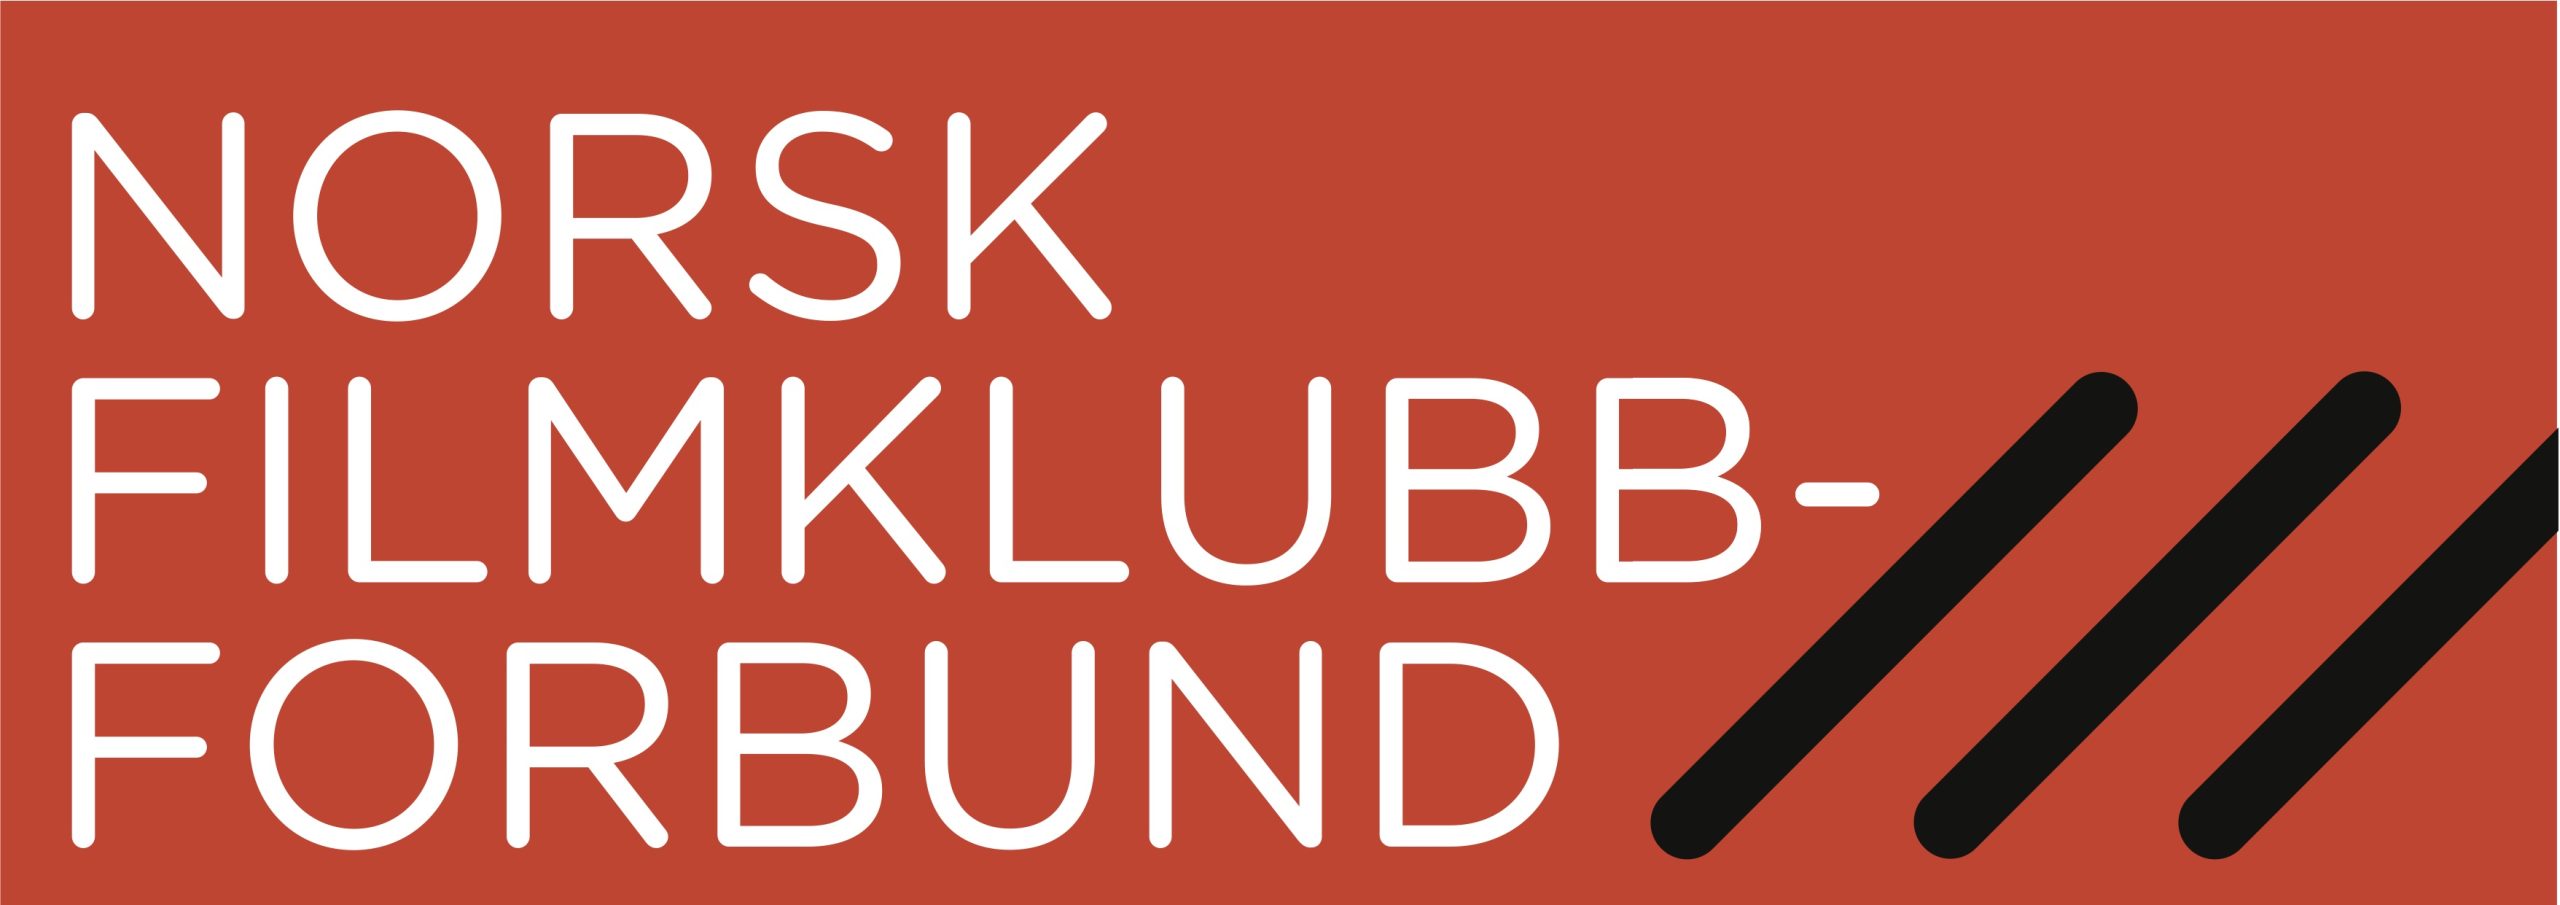 Norsk Filmklubbforbund logo